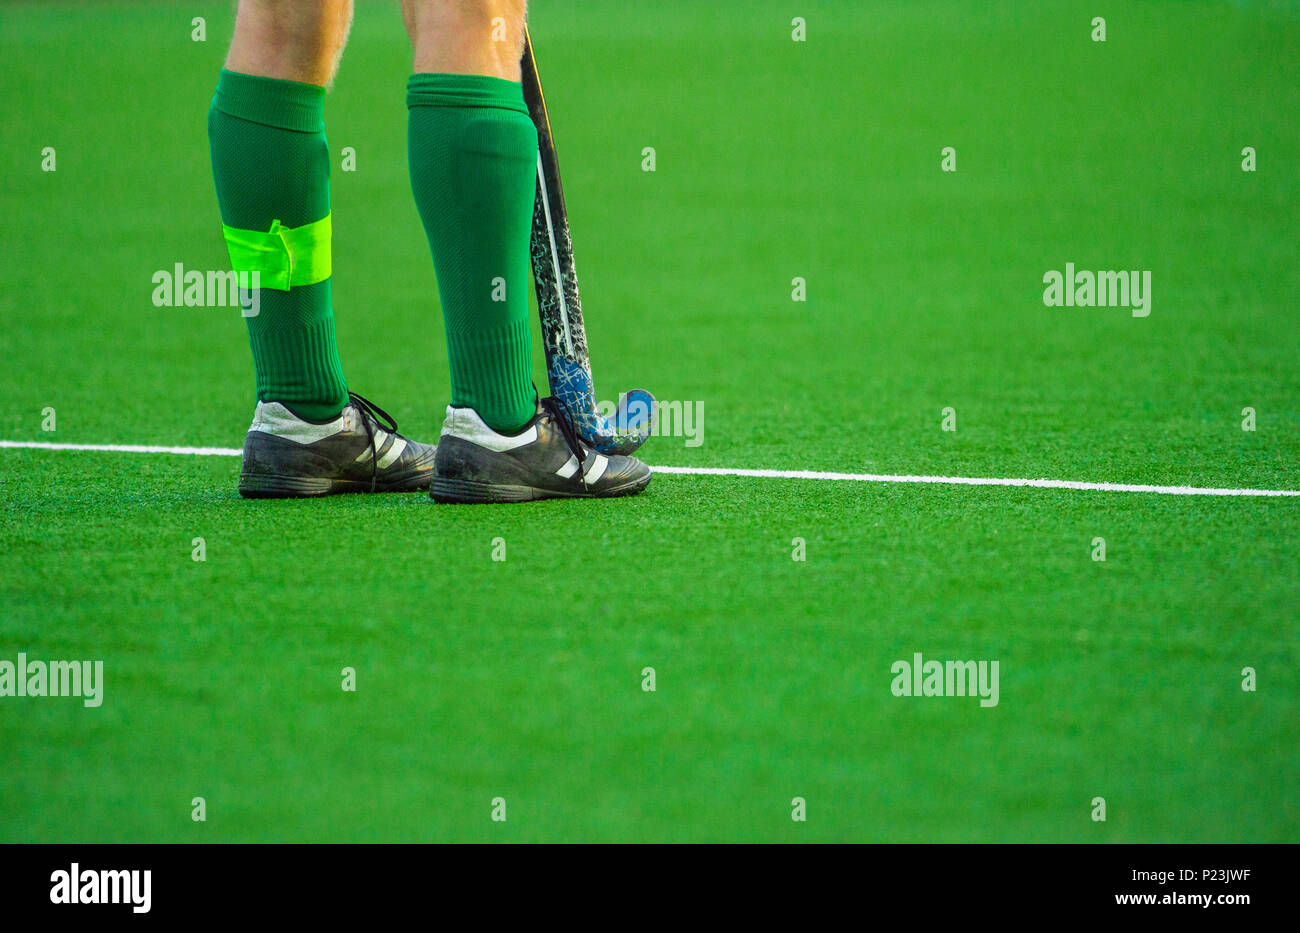 man field hockey player on the grass green background Stock Photo - Alamy